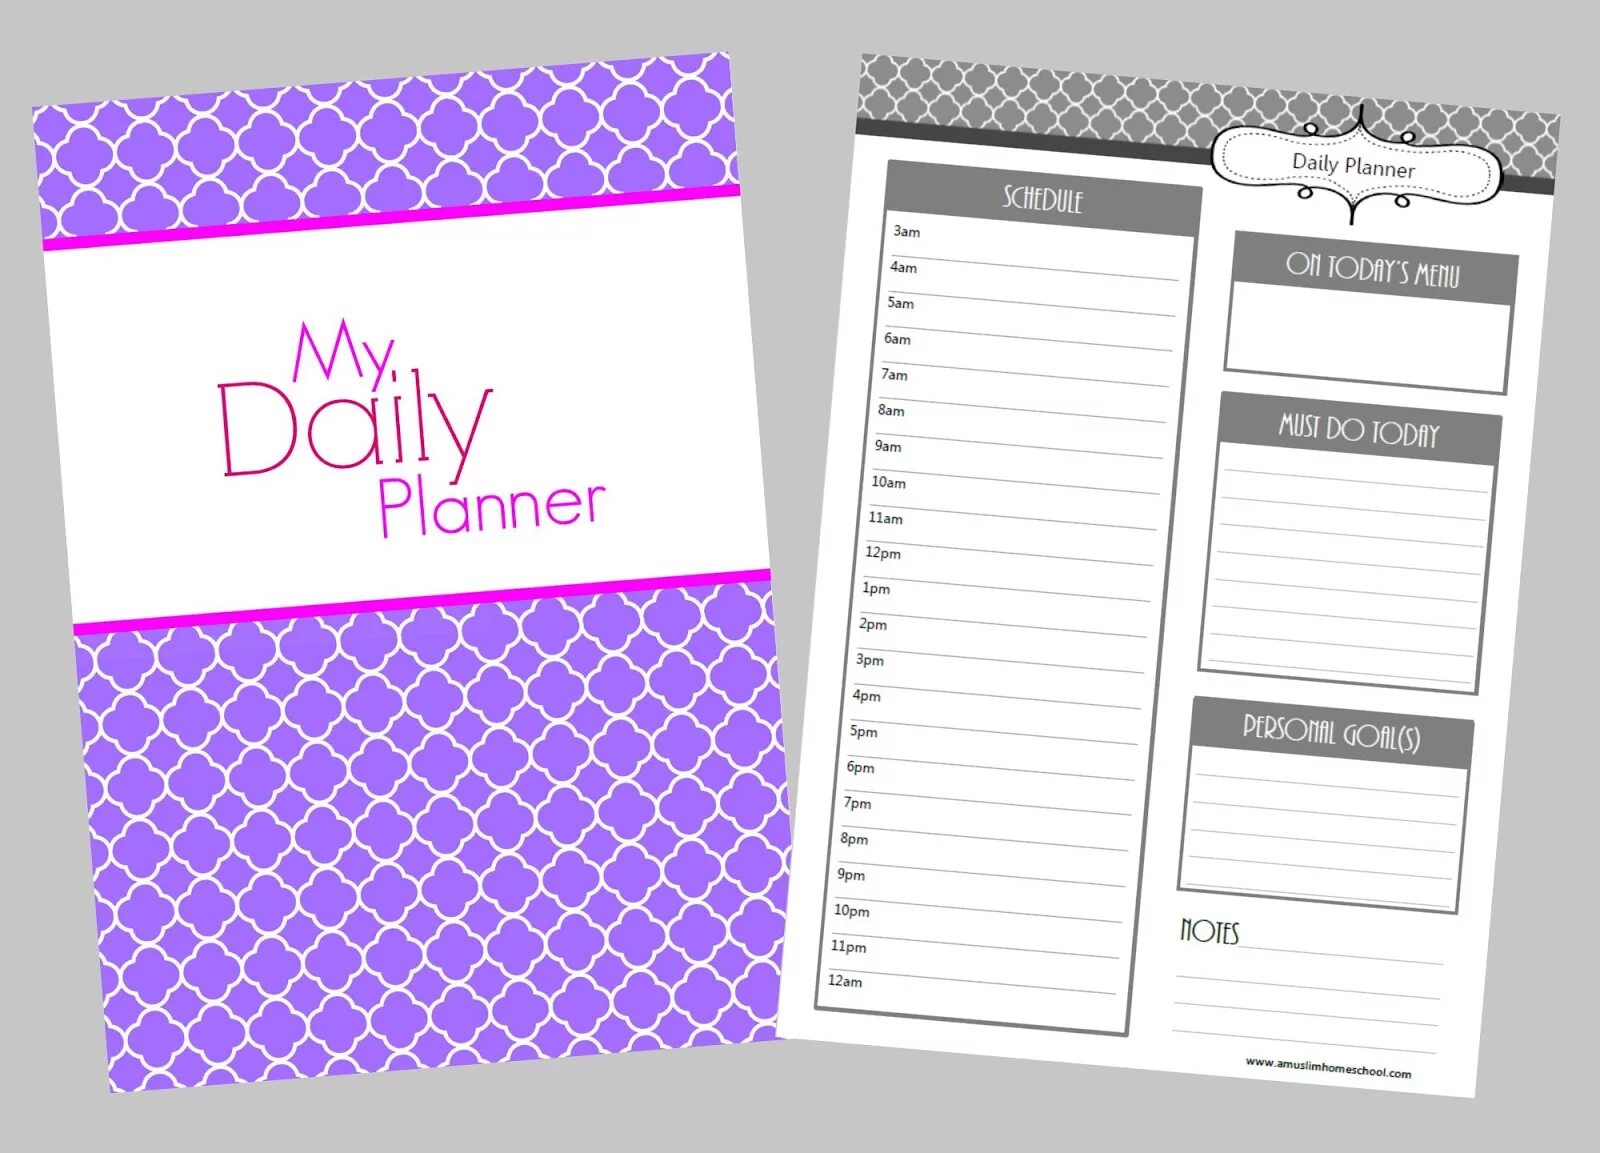 Daily Planner. Daily Planner для печати. Daily Planner шаблон. Планер для учебы. Planning your day